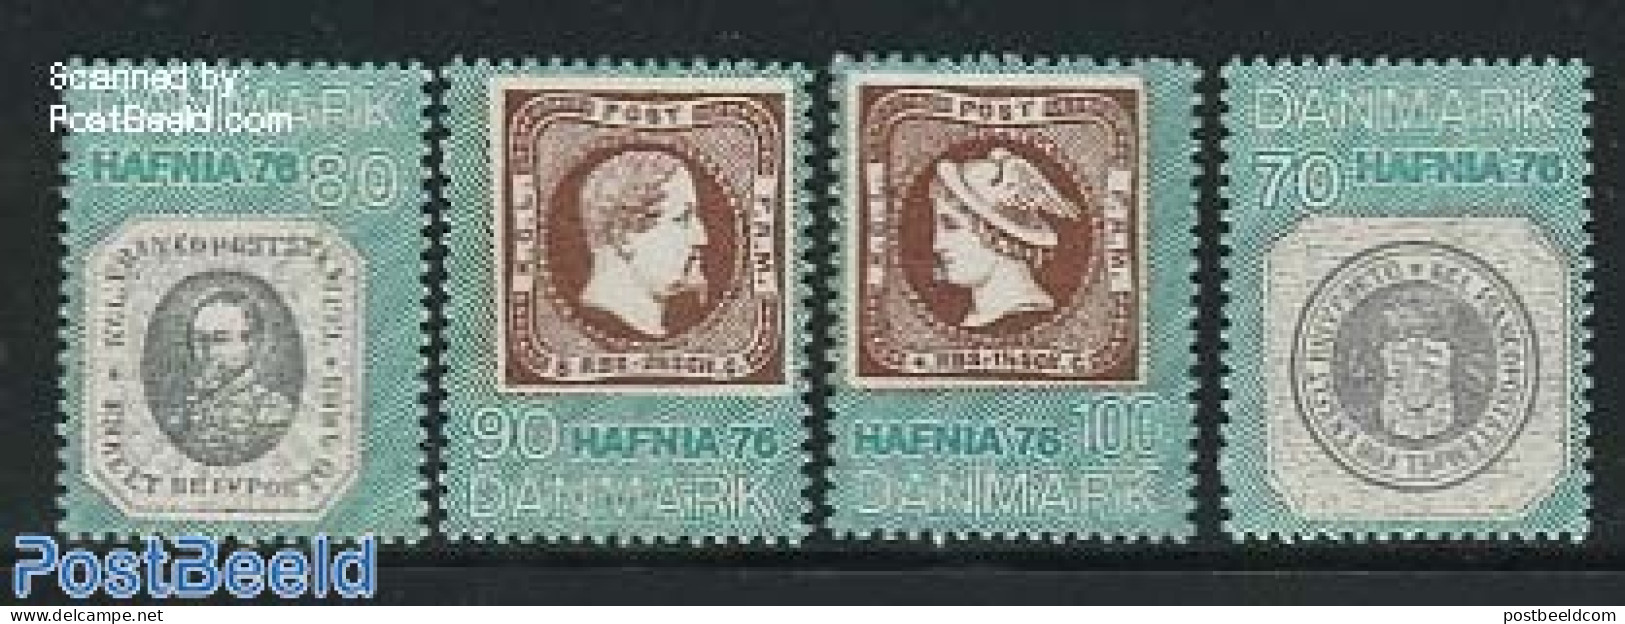 Denmark 1975 Hafnia 76 4v, Mint NH, Stamps On Stamps - Nuovi